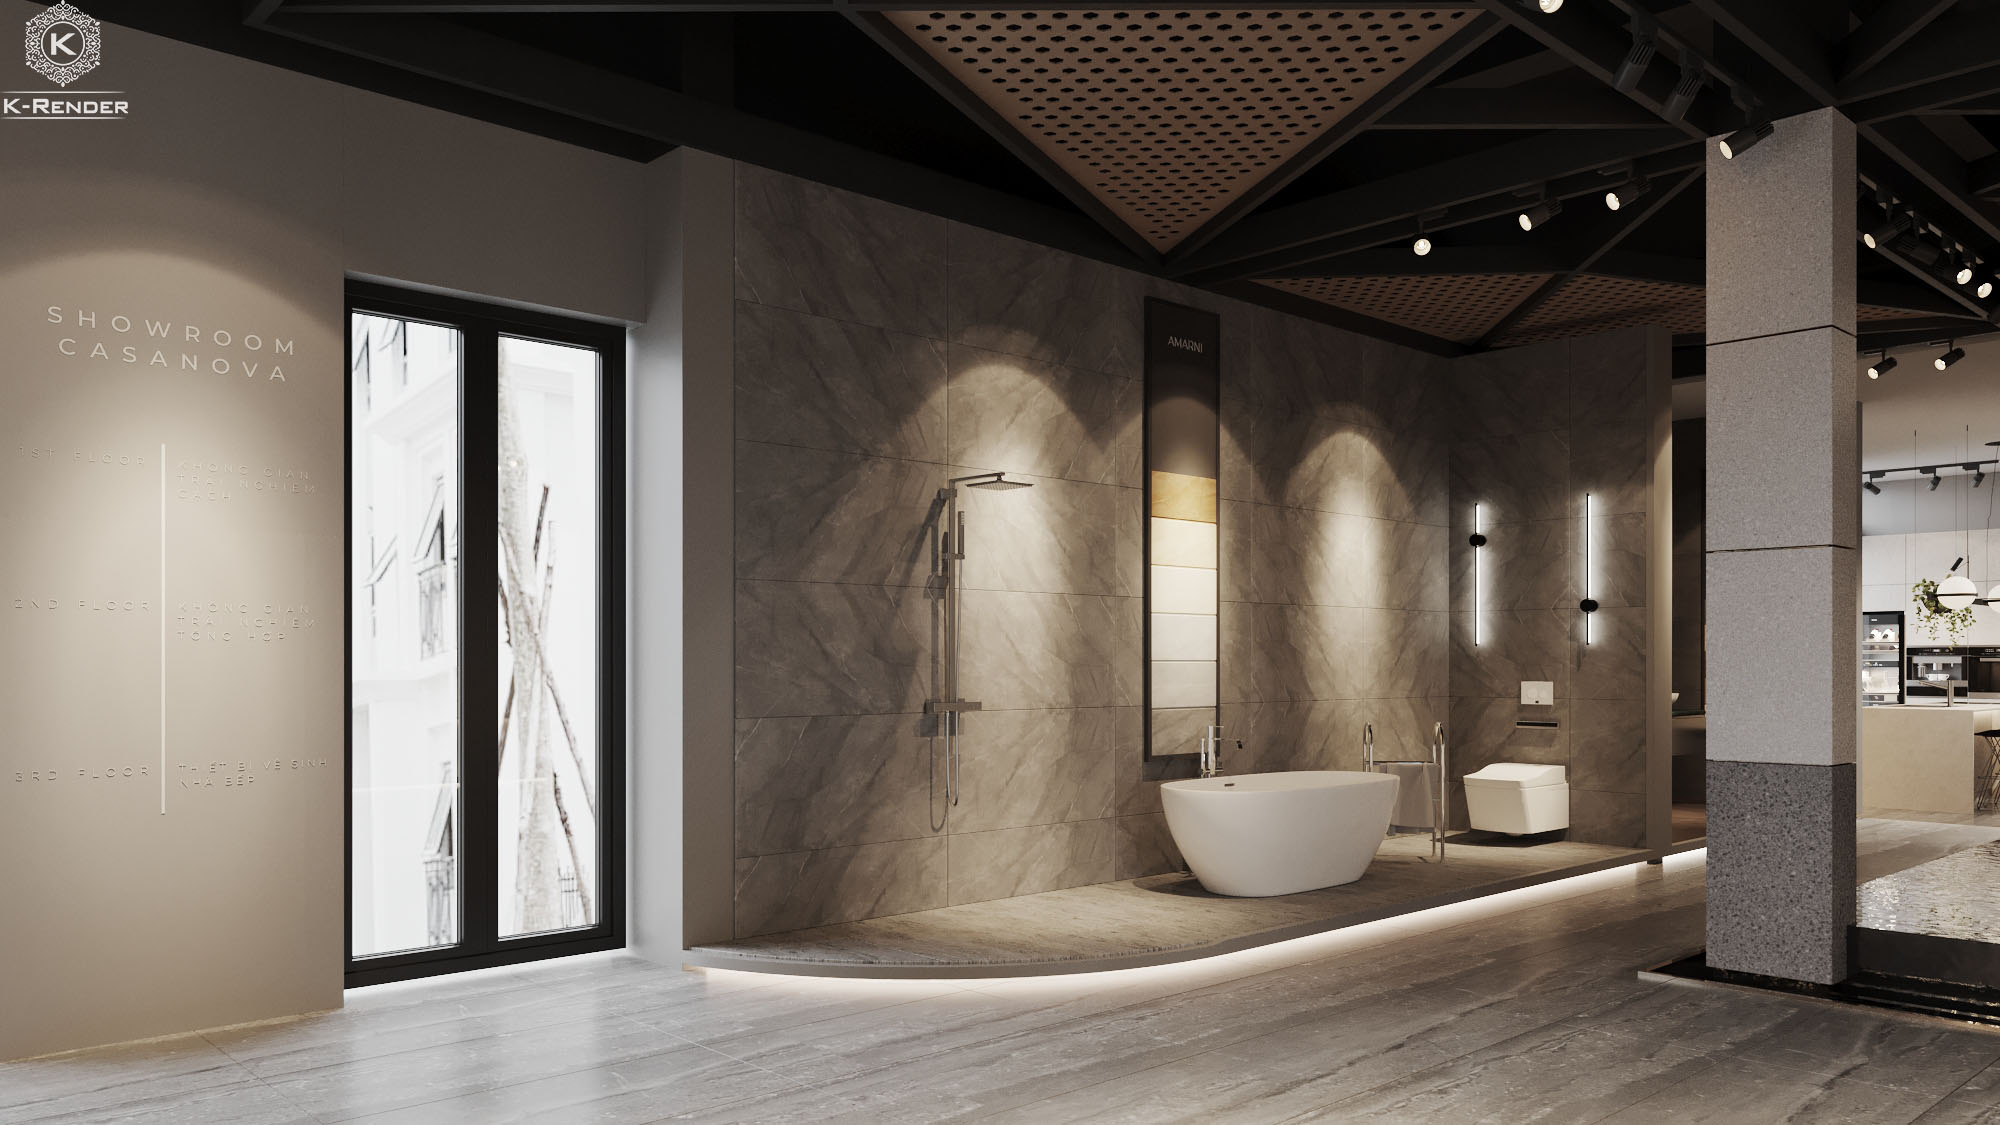 introduce-casanova-project-a-luxury-showroom-of-k-render-studio